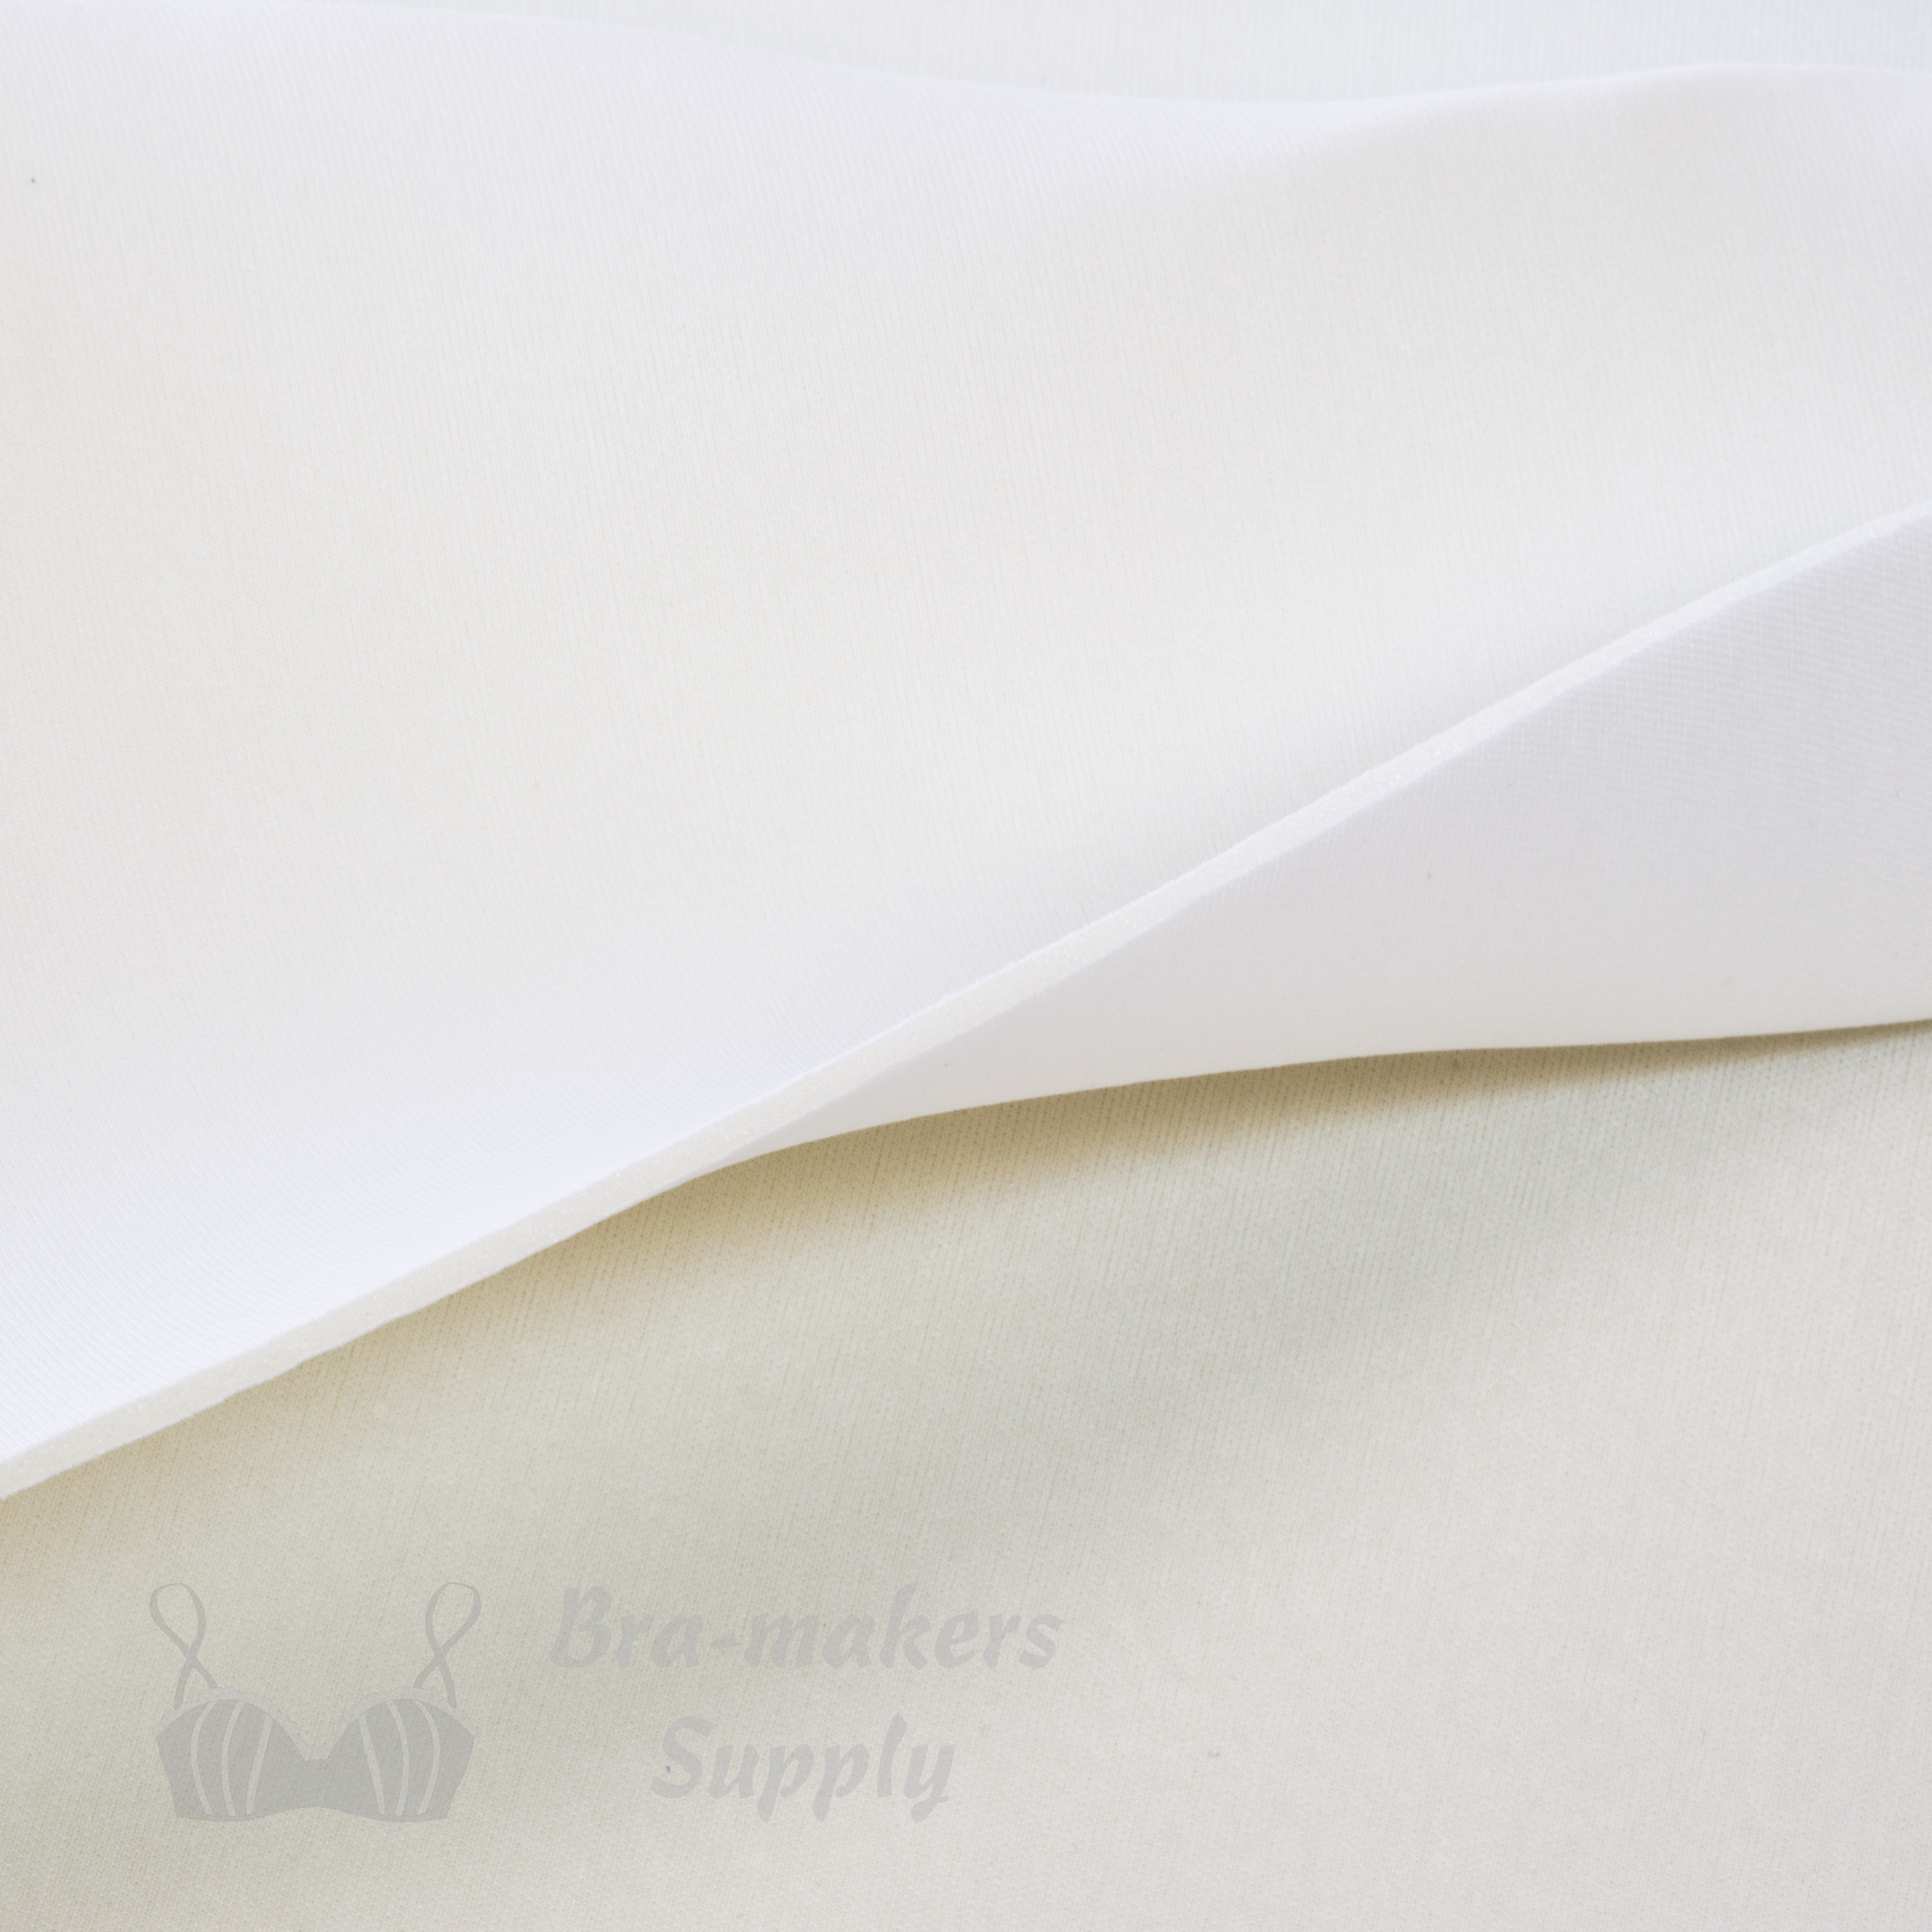 pre-finished foam padding cut sew foam swimwear foam FF-6 white or bright white Pantone 11-0601 from Bra-Makers Supply Hamilton